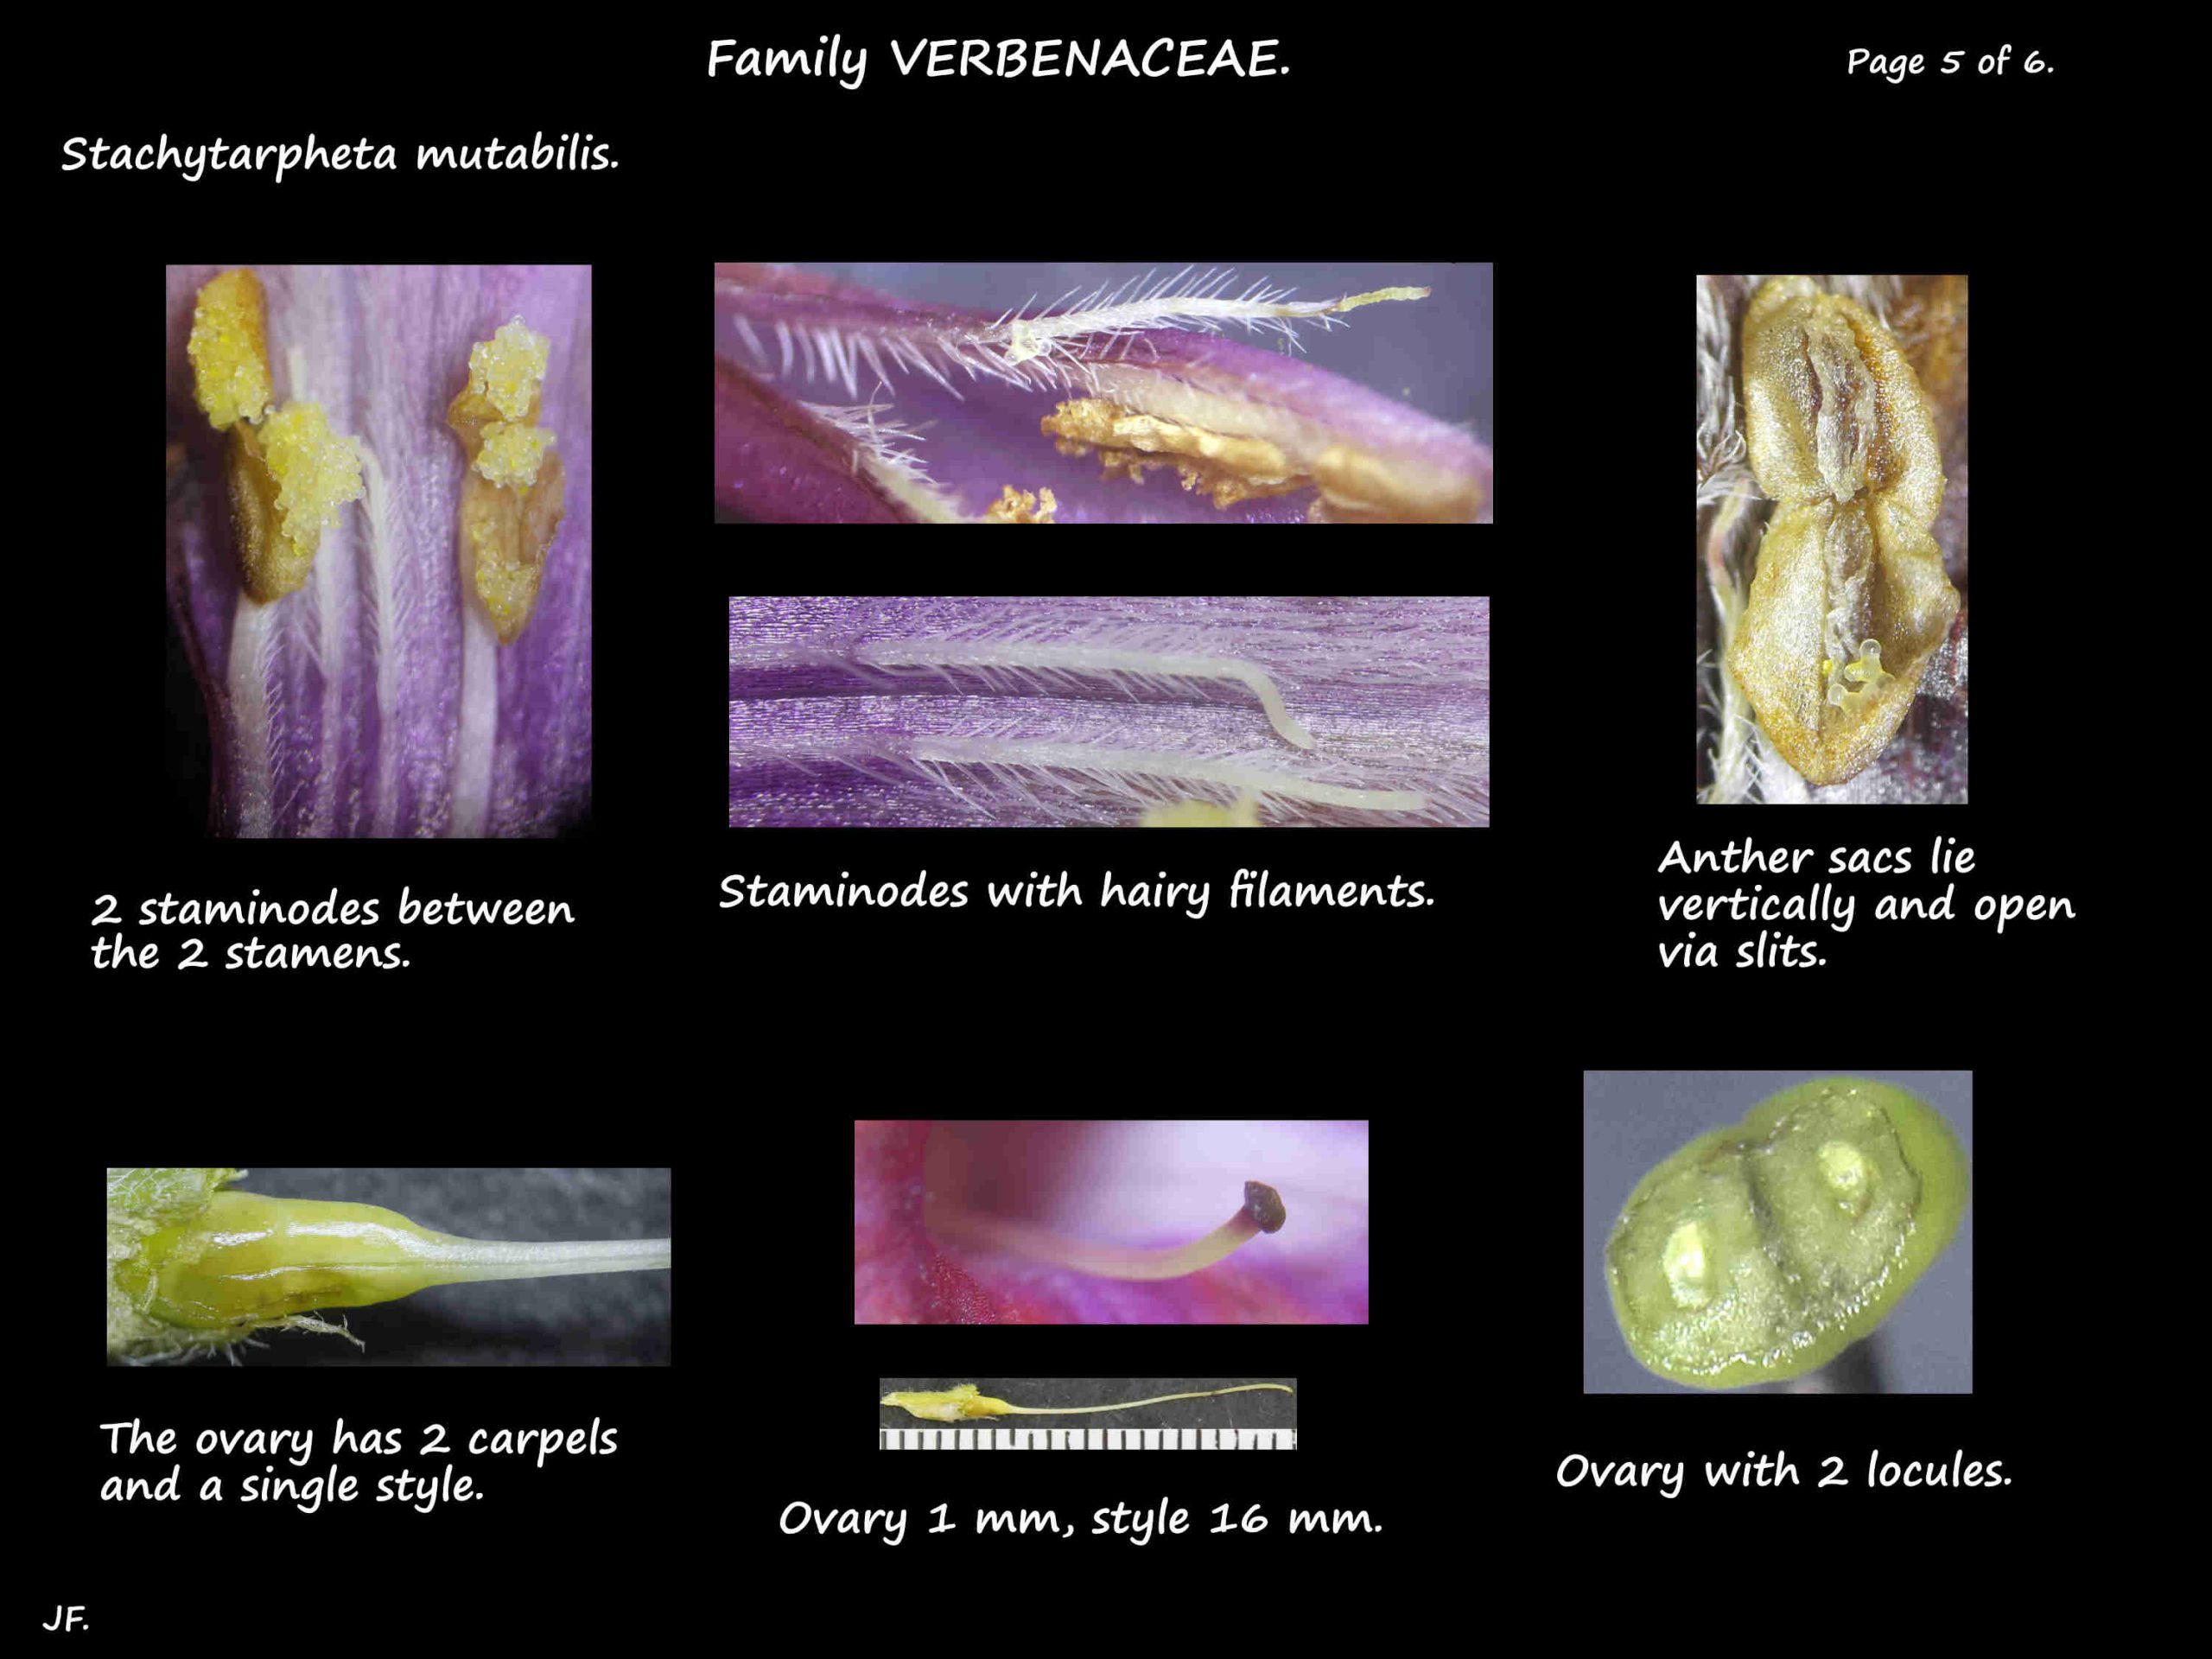 5 Stachytarpheta mutabilis stamens & ovary